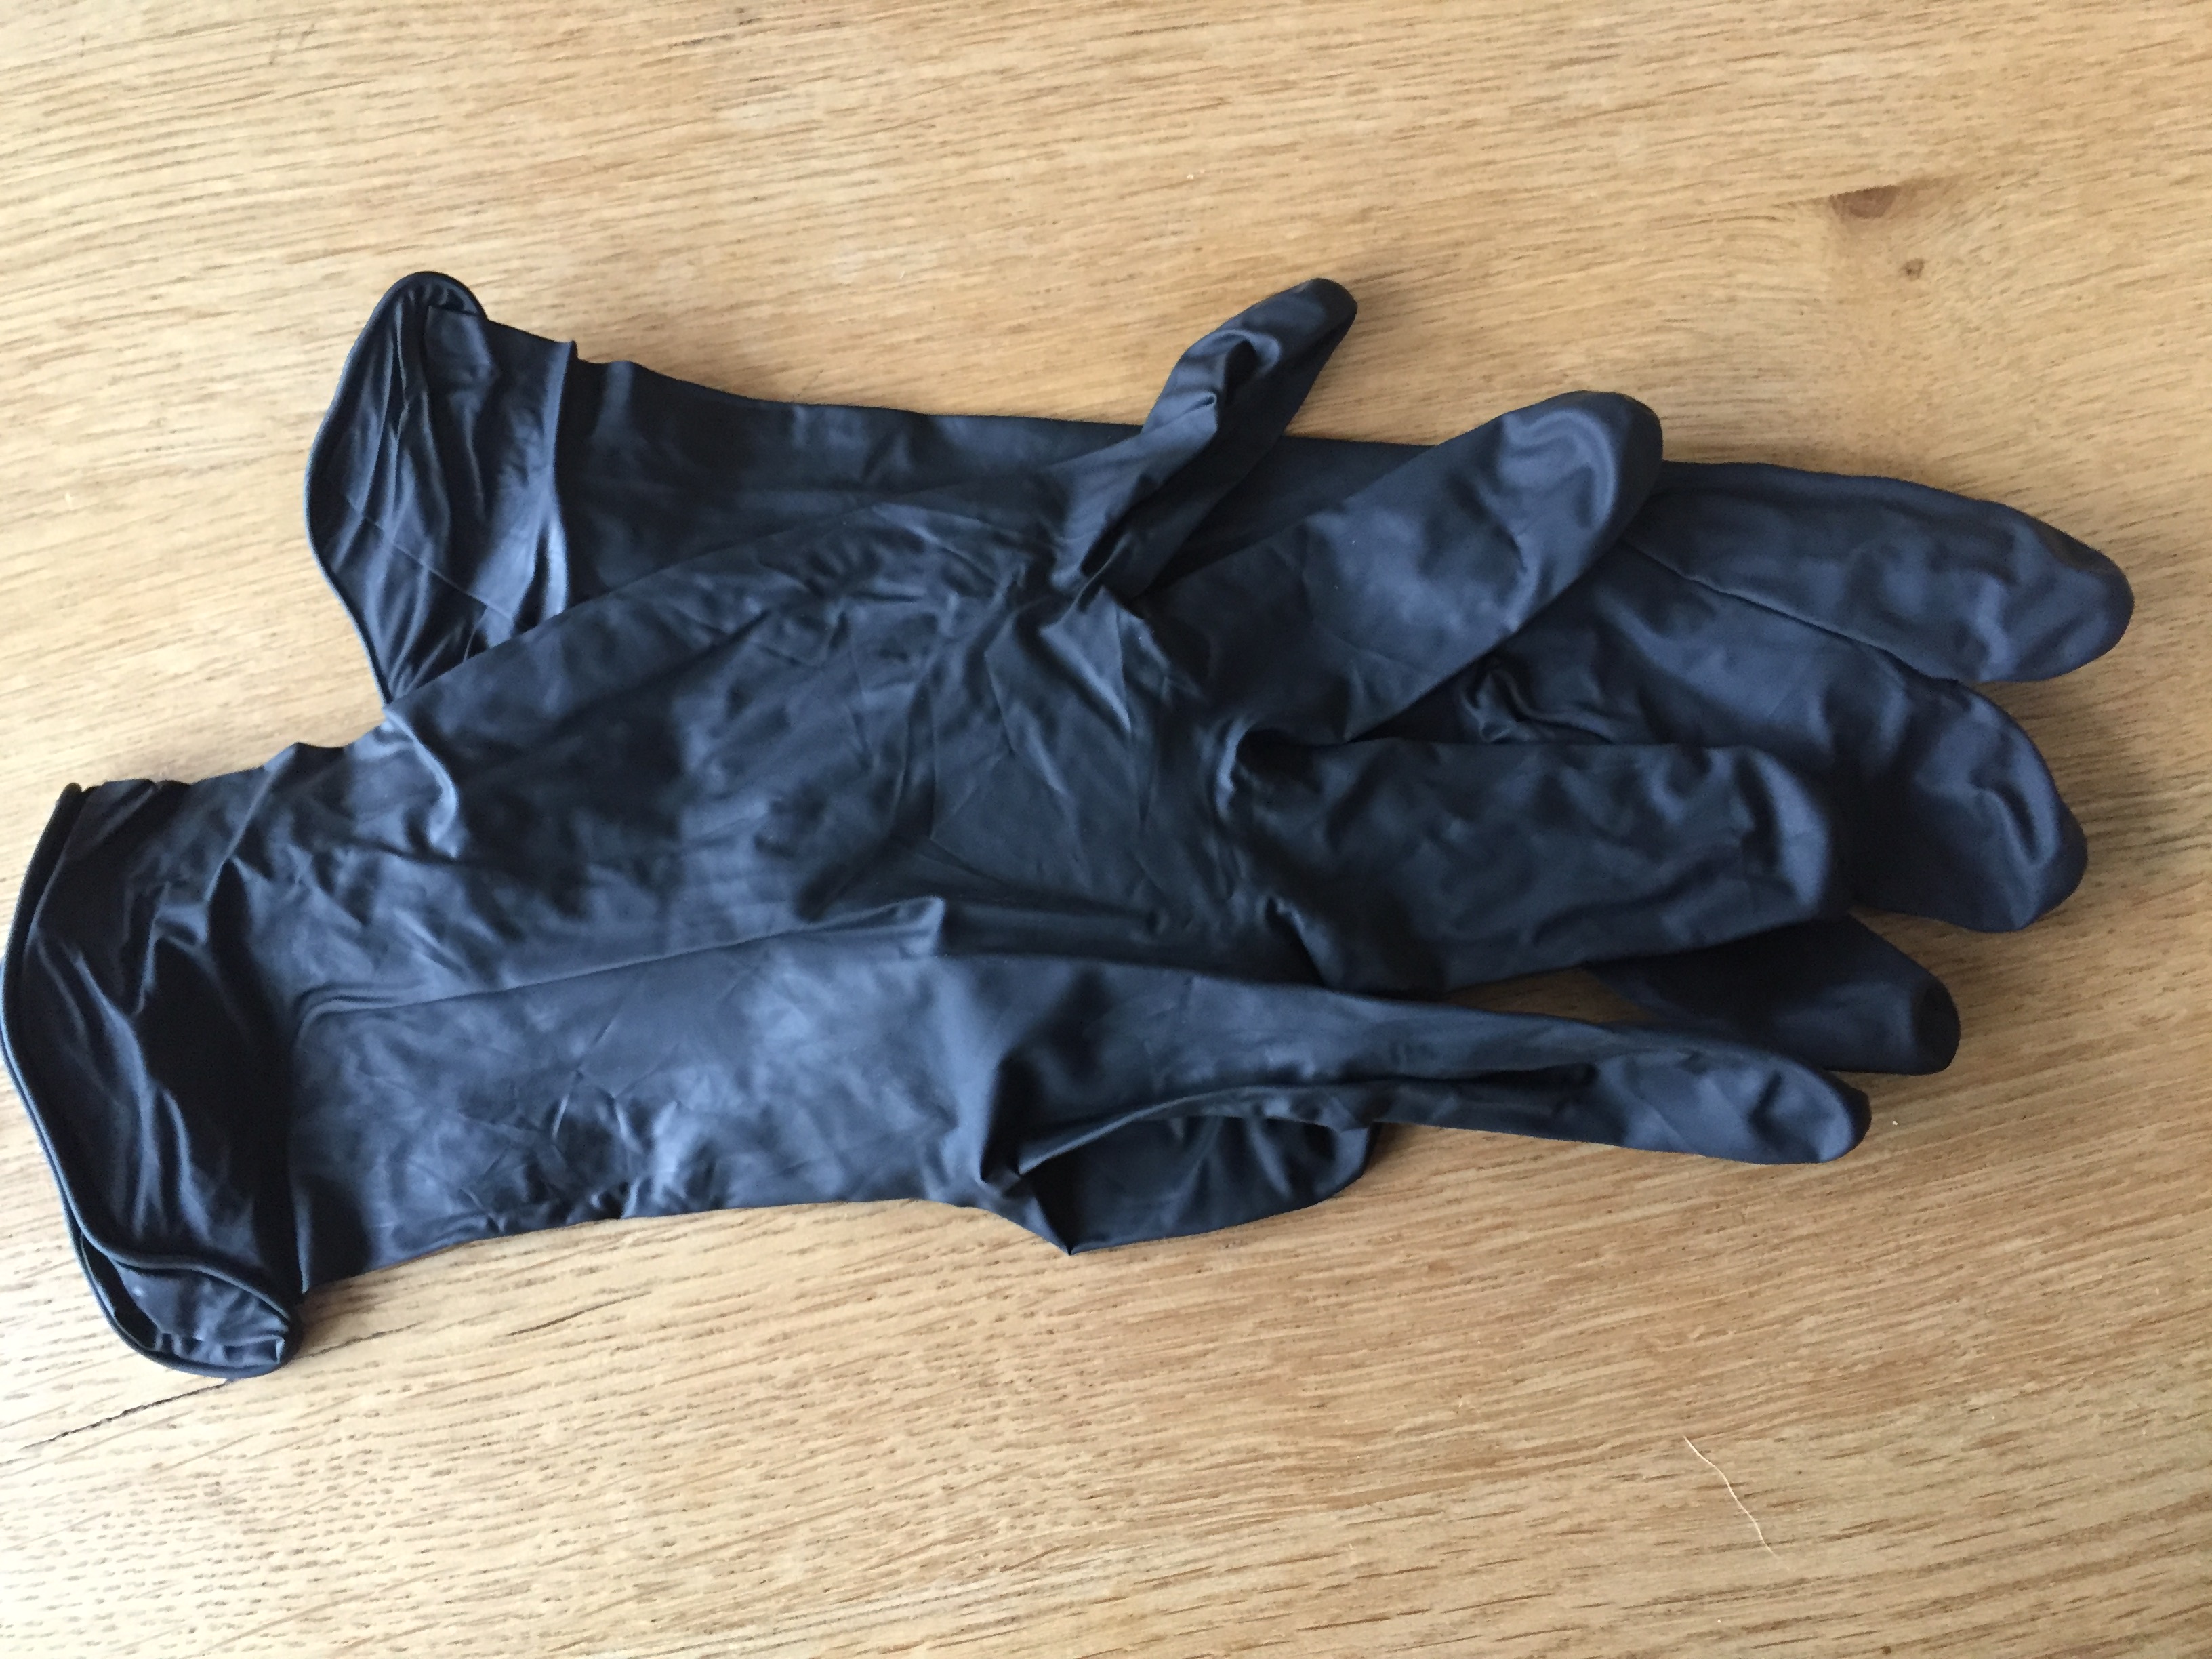 Gloves (pair).  Esselle Pole Repairs